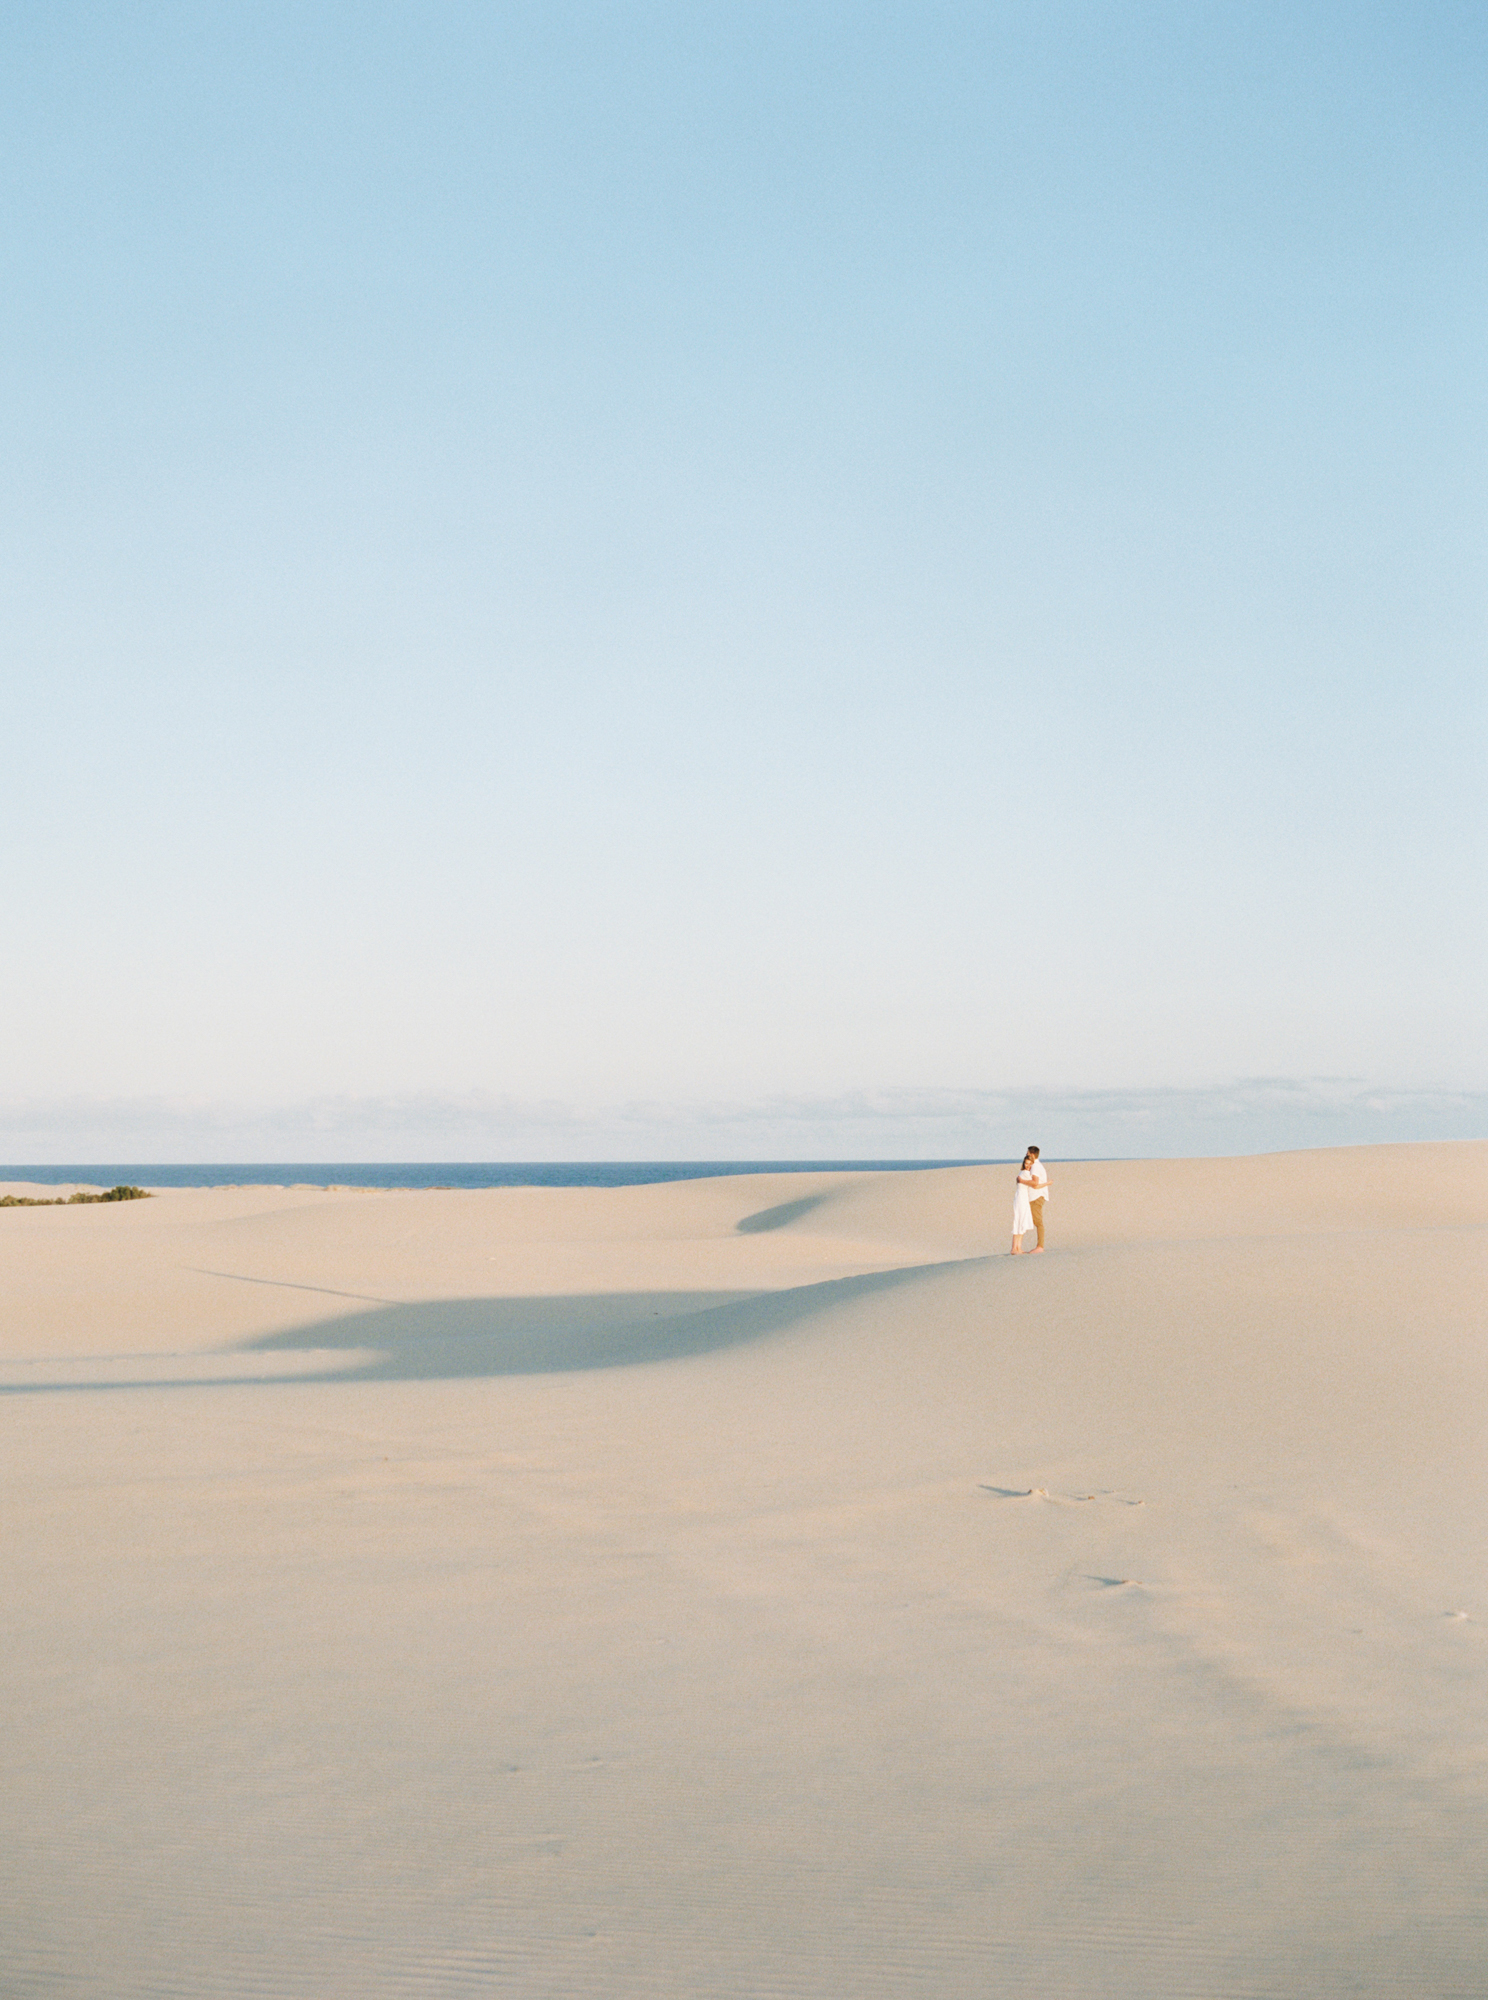 Port Stephens Australian Newcastle NSW Stockton Sand dunes for honeymoon photos by Elopement Fine Art Film Photographer Sheri McMahon